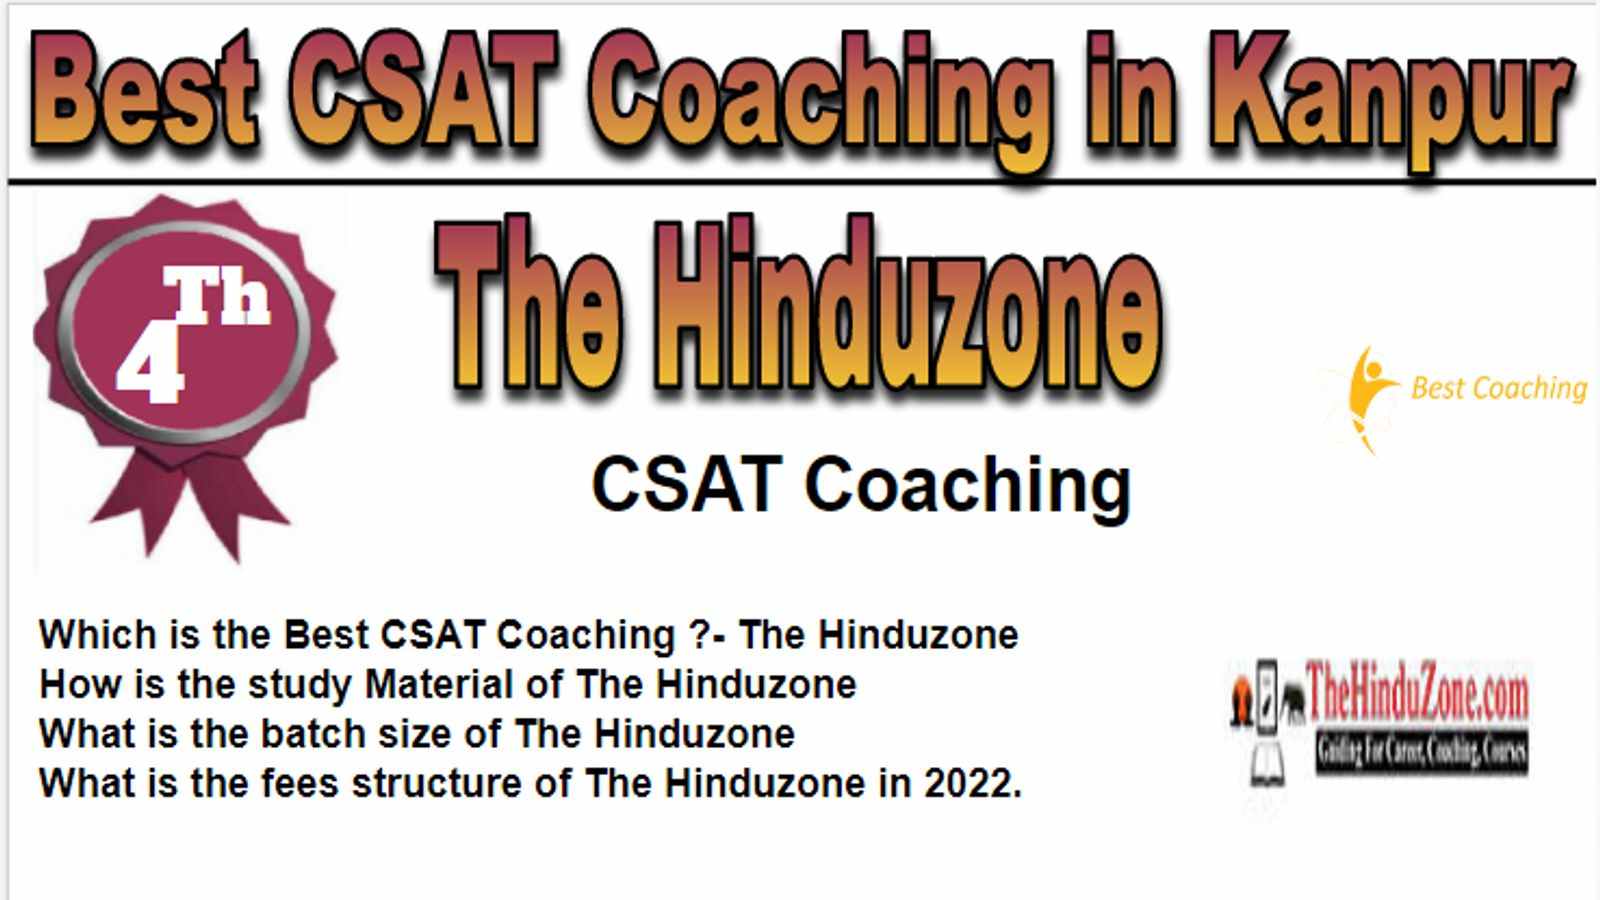 Rank 4 Best CSAT Coaching in Kanpur